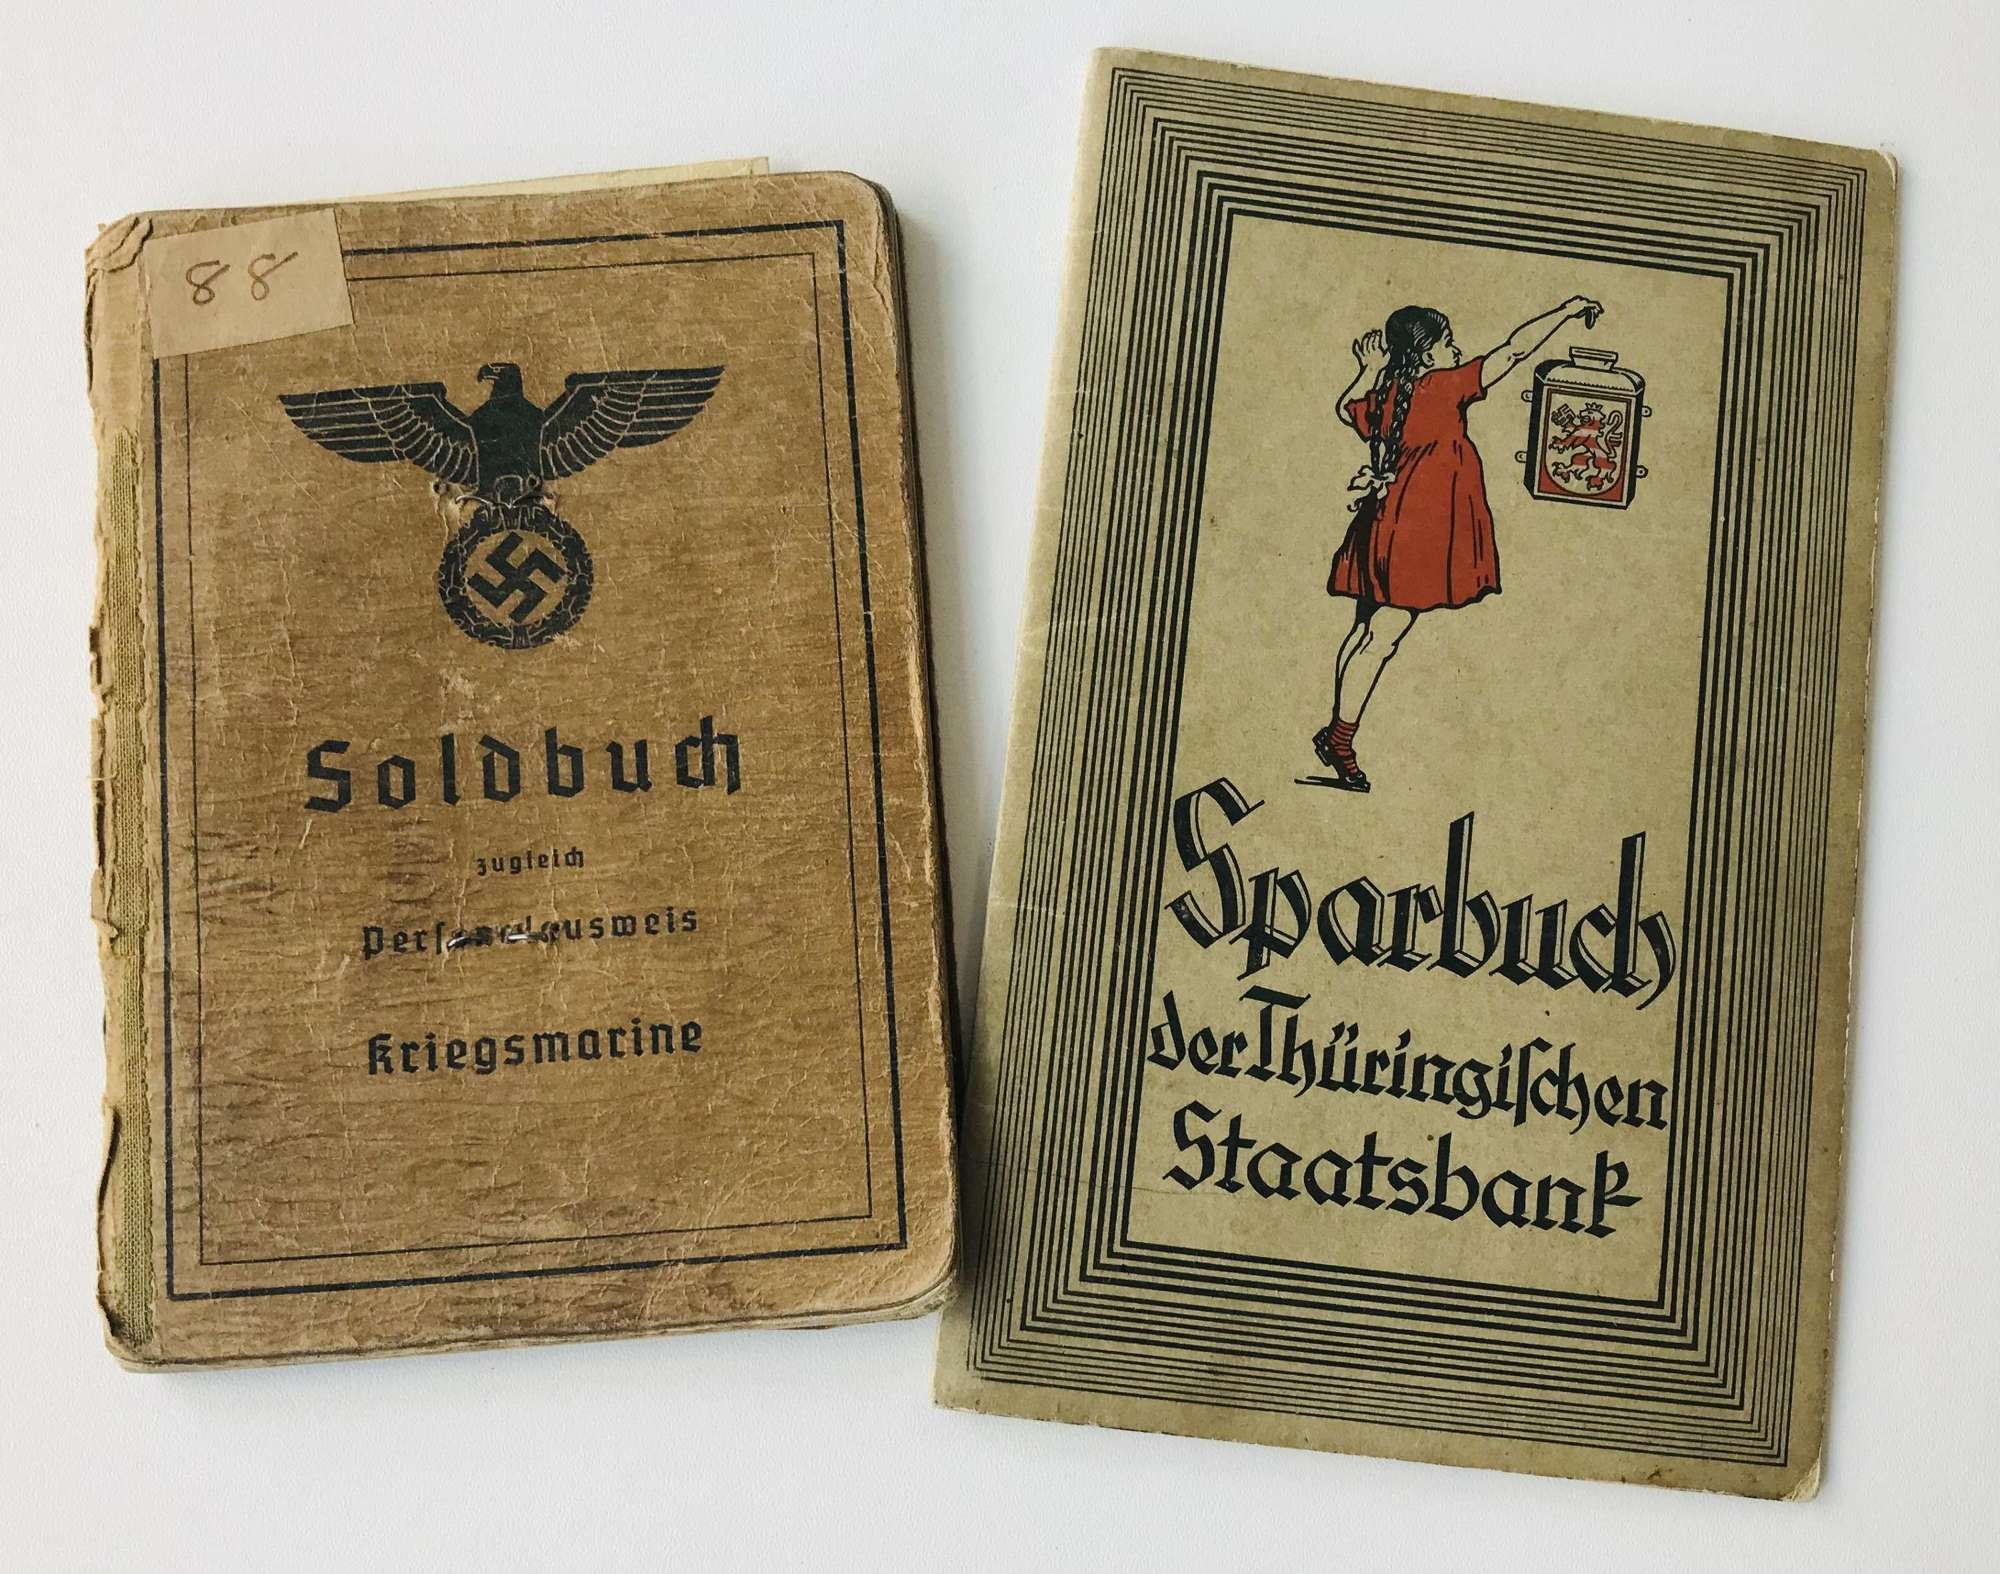 Kreigsmarine Soldbuch and savings book